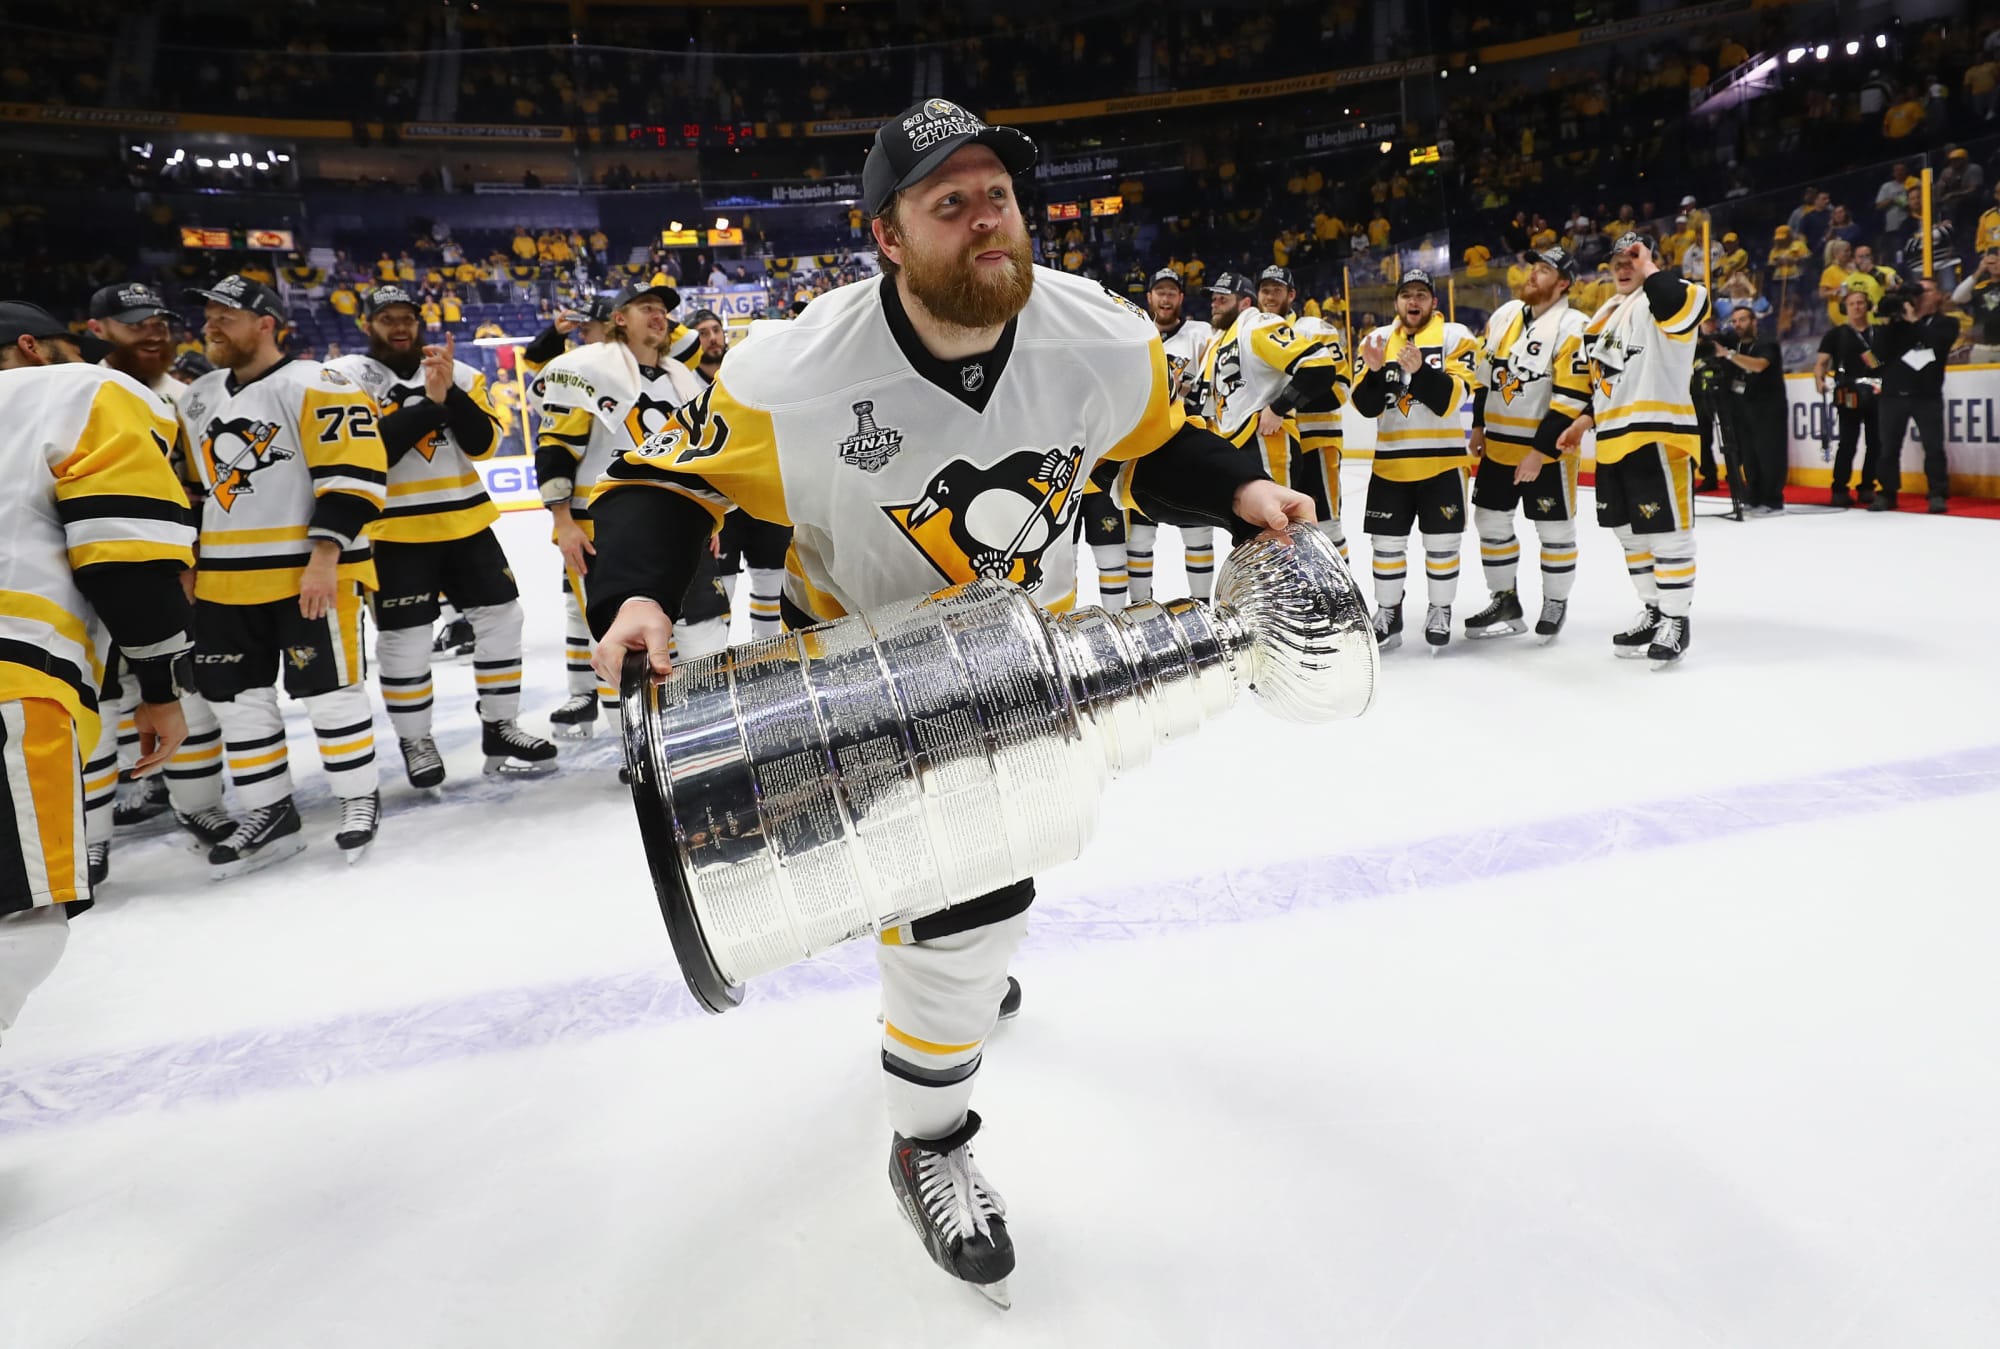 Pass or Fail: Pittsburgh Penguins' 2017 Stadium Series jersey